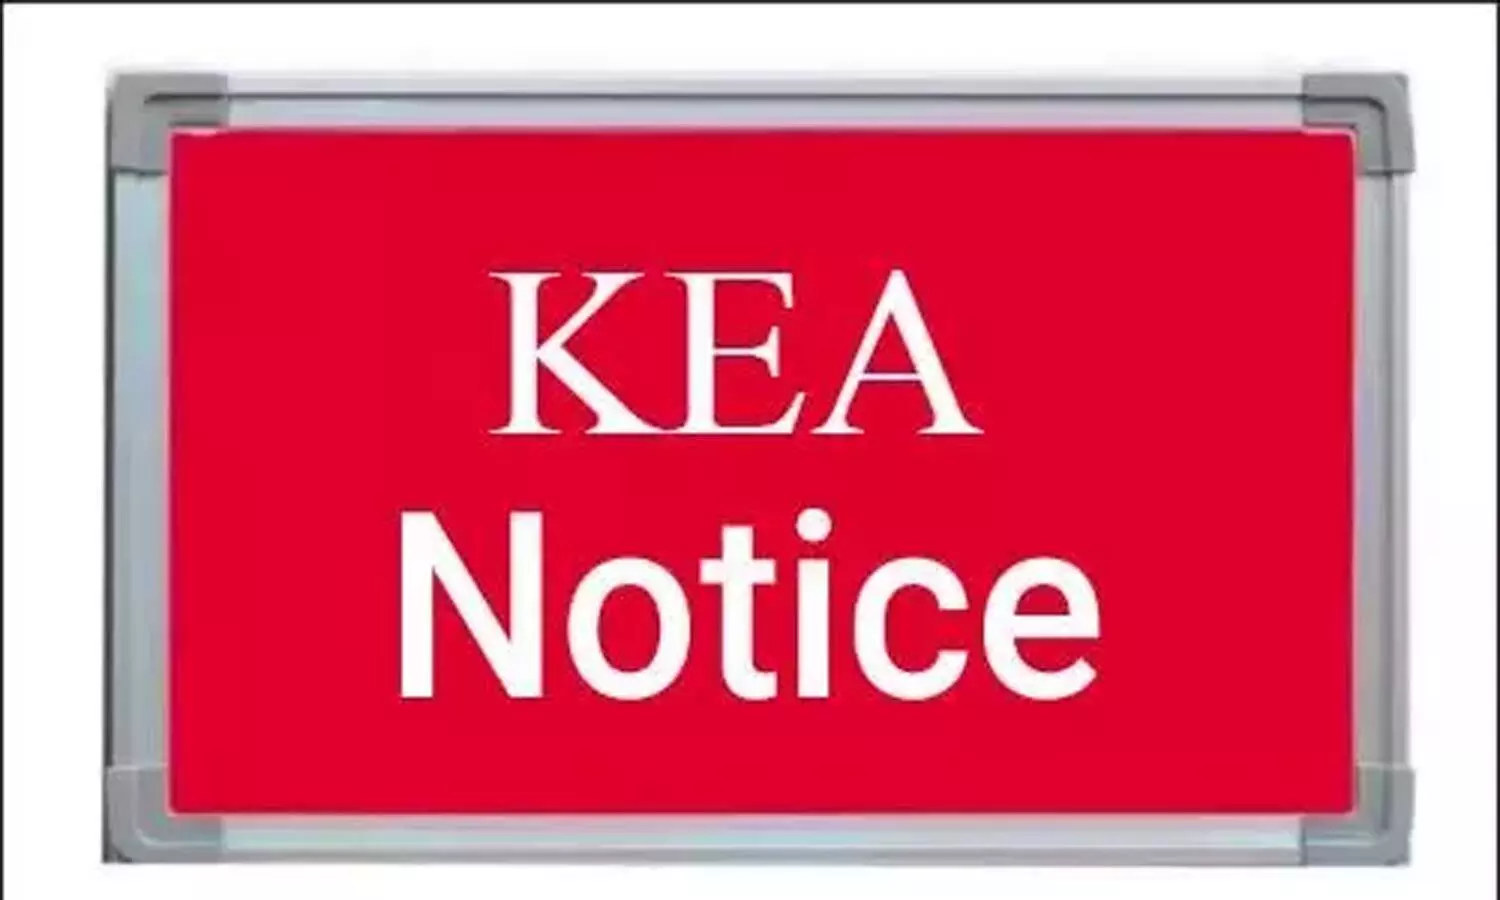 MSc Nursing 2020 in Karnataka: KEA releases instructions, hall ticket for candidates